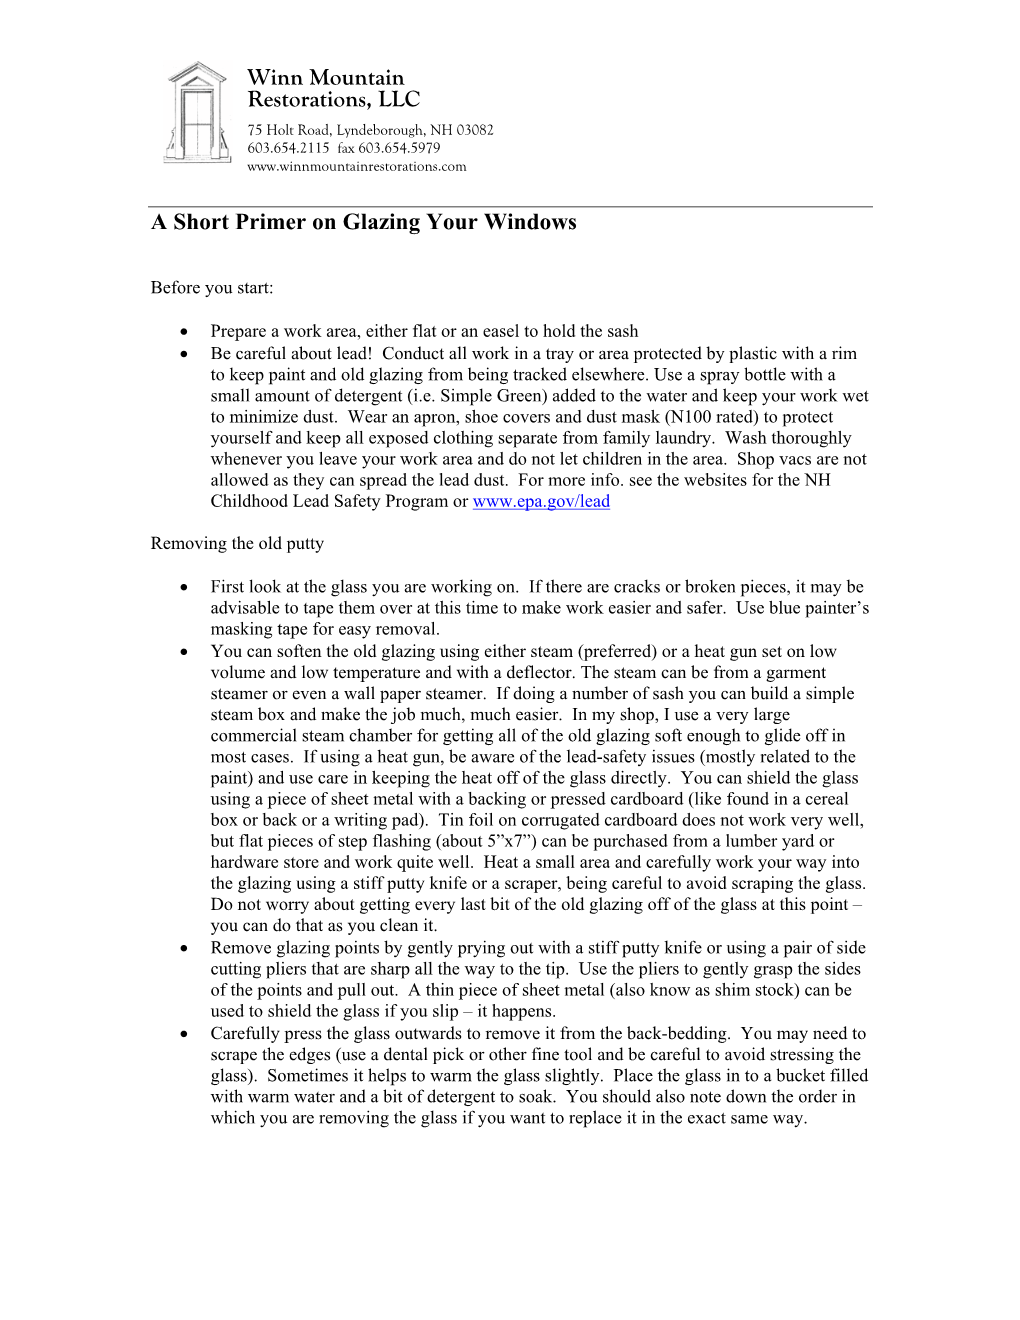 Winn Mountain Restorations, LLC a Short Primer on Glazing Your